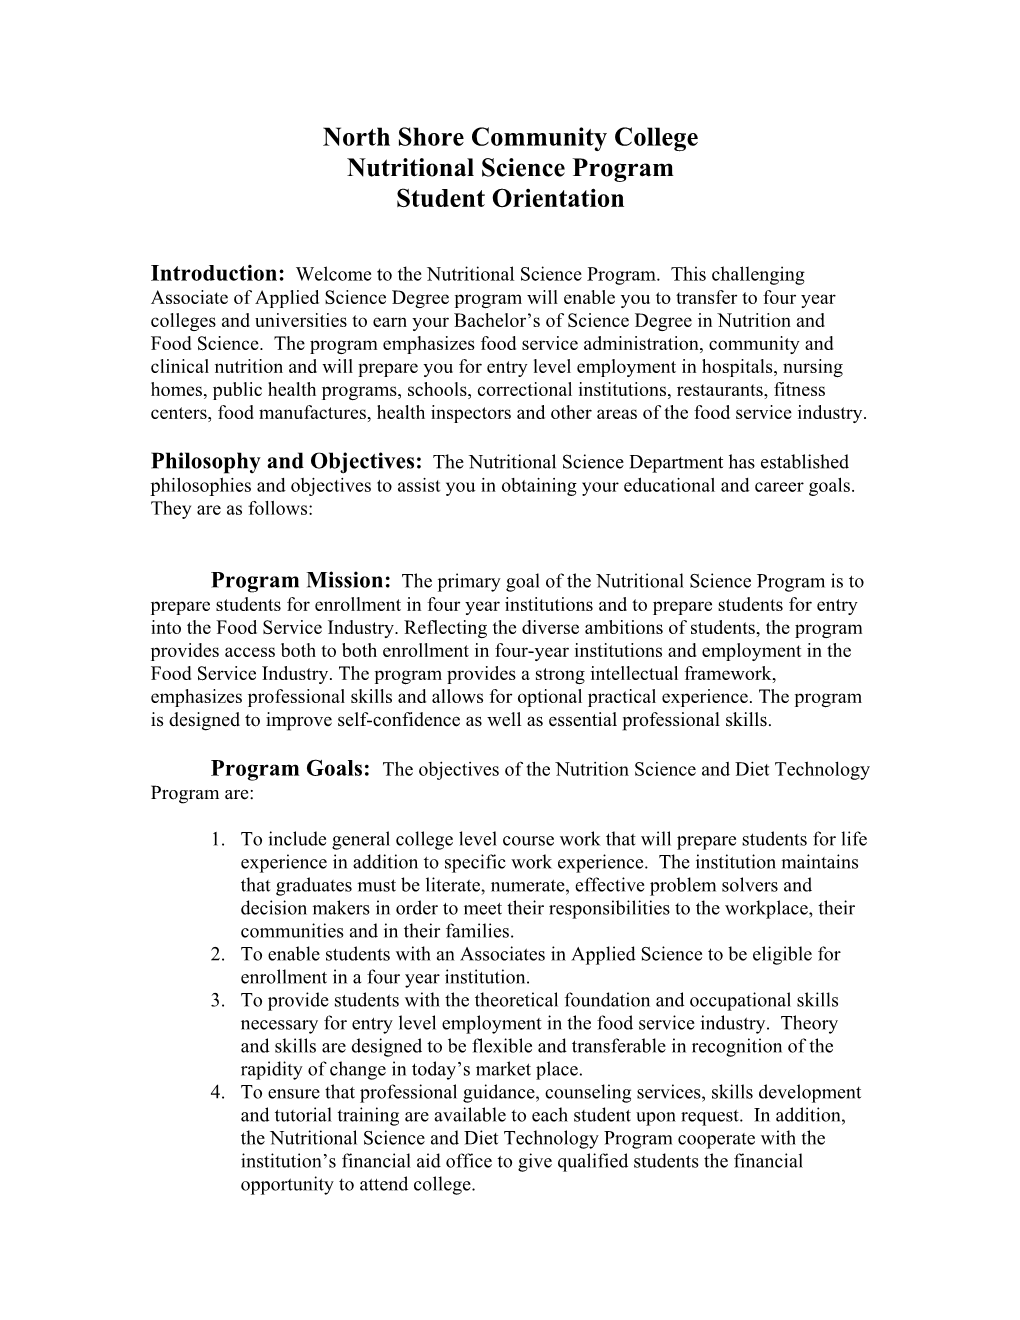 North Shore Community College Nutritional Science Program Student Orientation